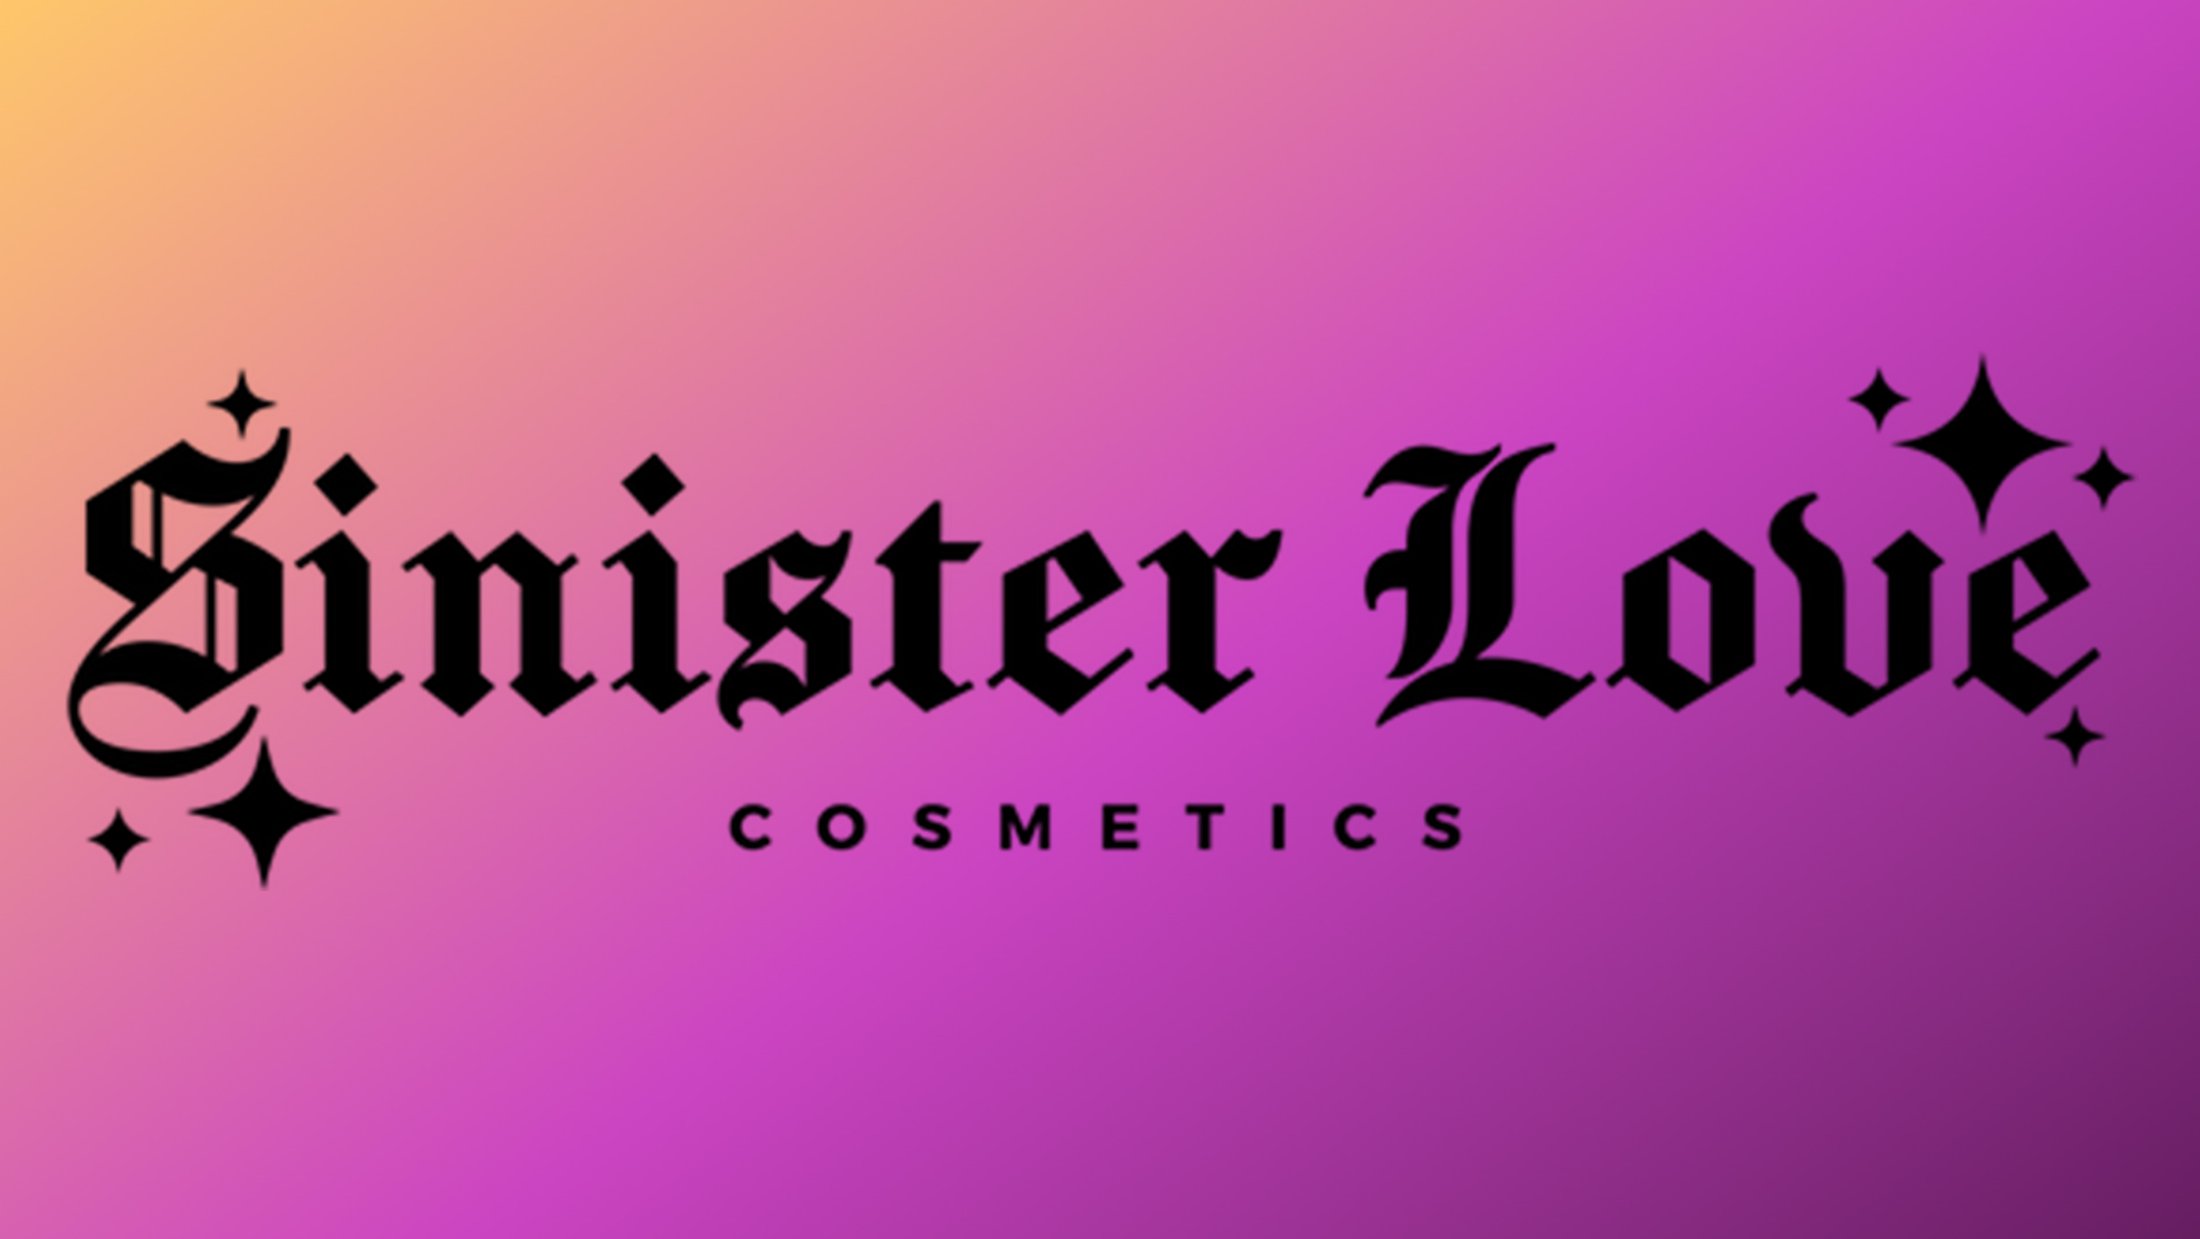 Sinister Love Cosmetics